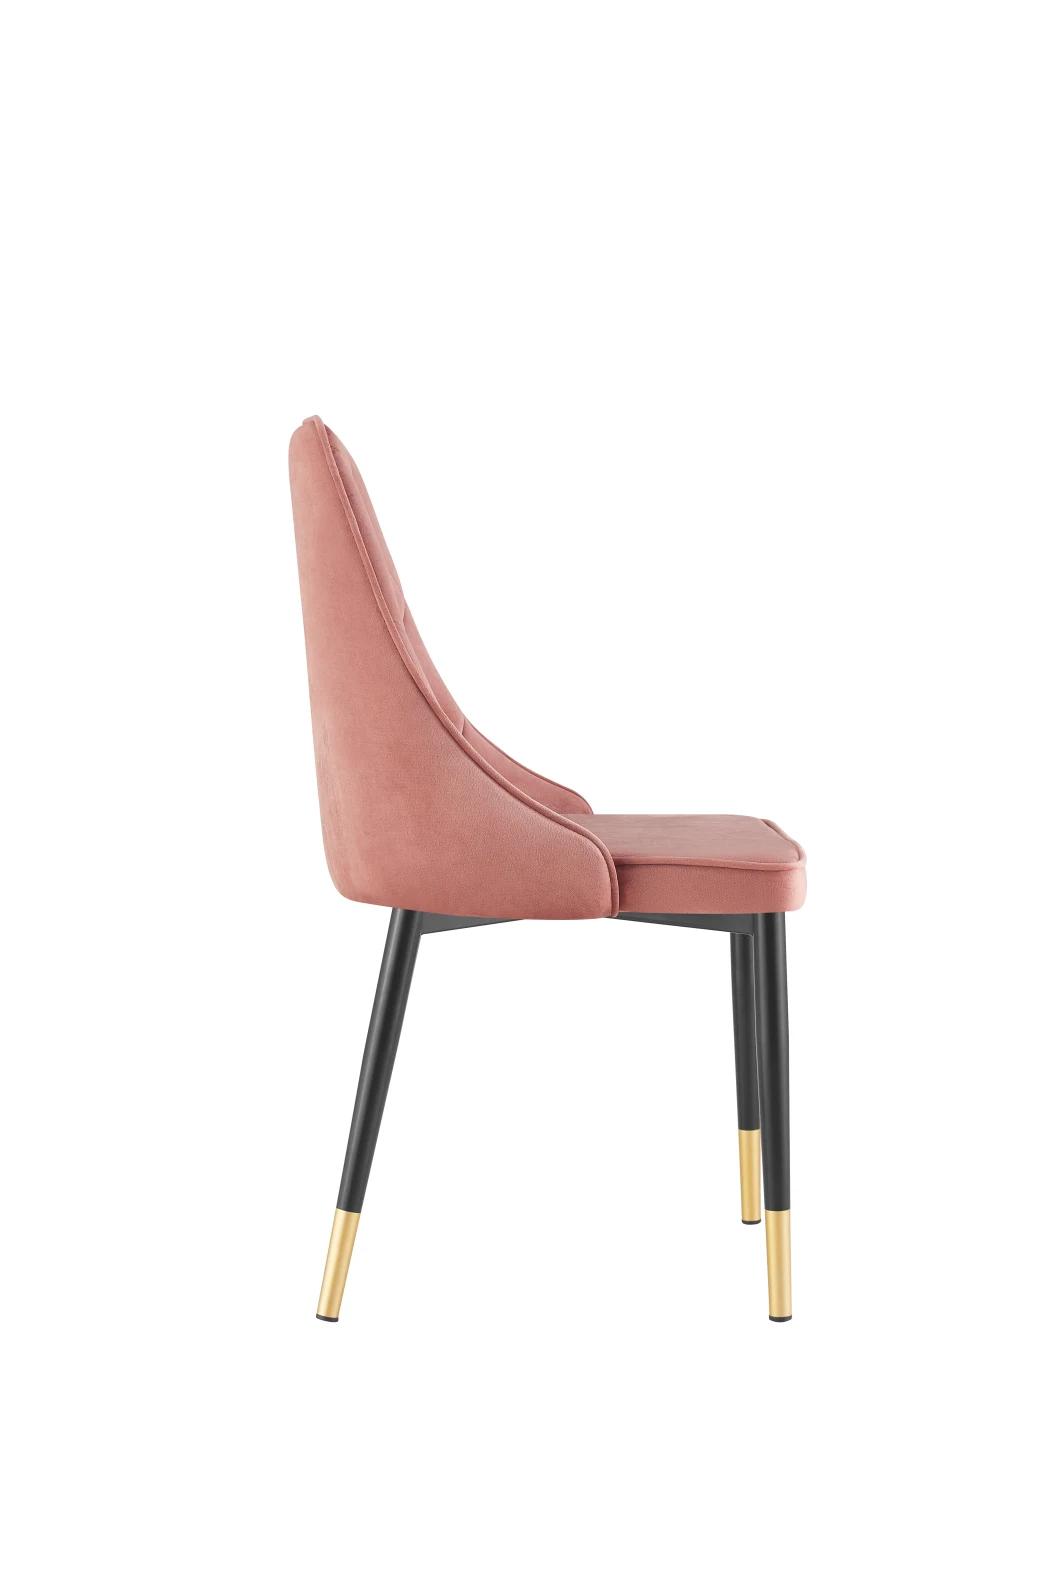 Dining Sofa Metal Chair Room Set Coffee Hotel Luxury Upholstered Soft Back Velvet Fabric